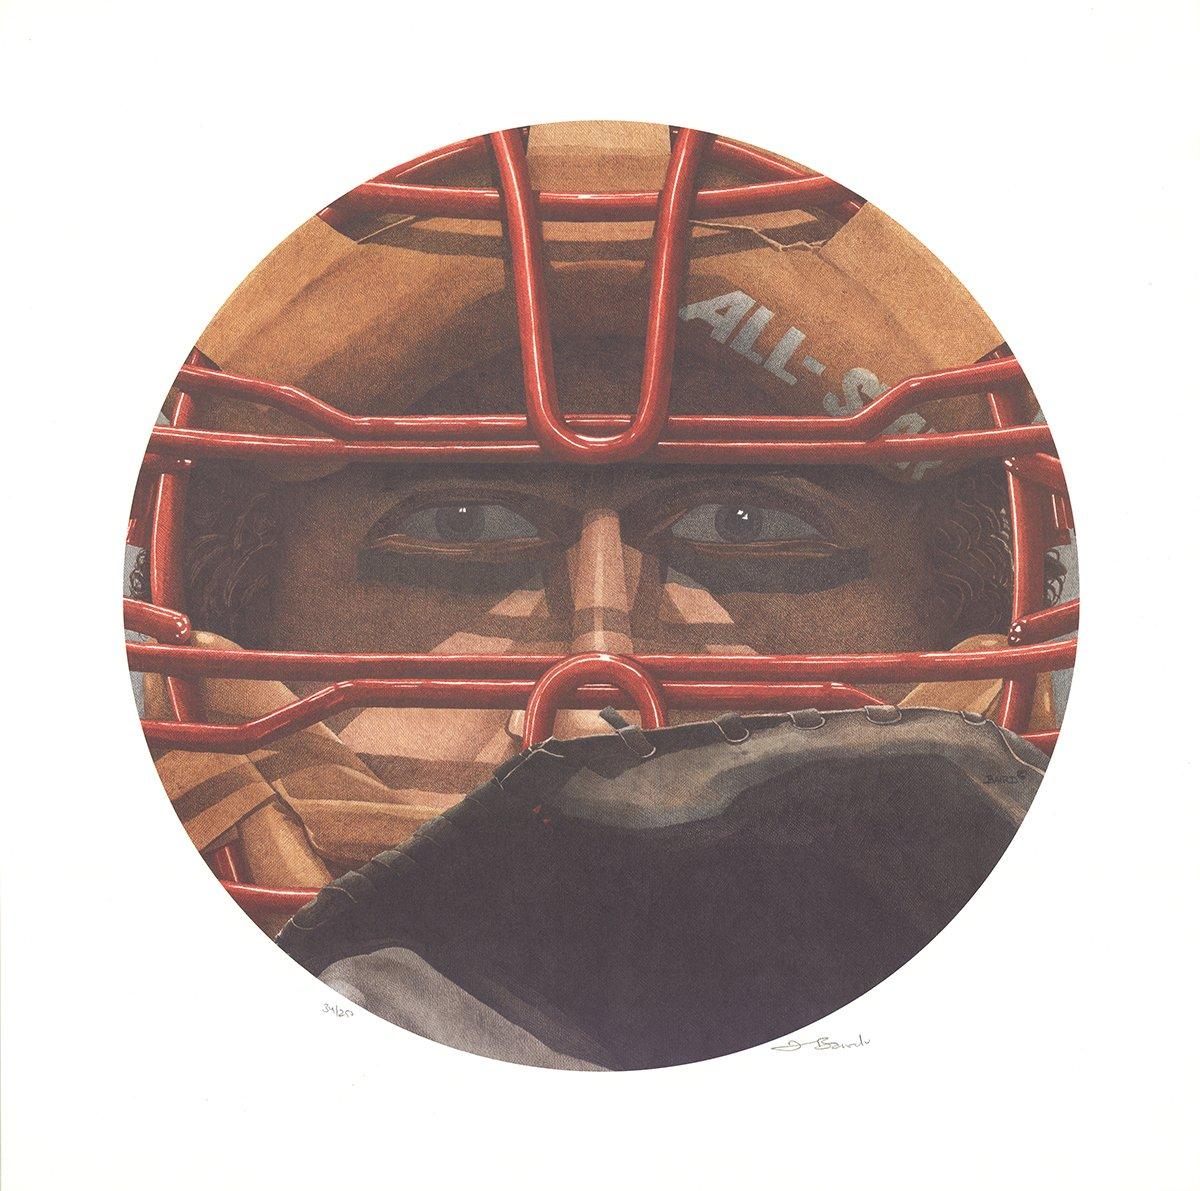 1994 Dwight Baird „Inside looking out“ Die Baseball-Kollektion